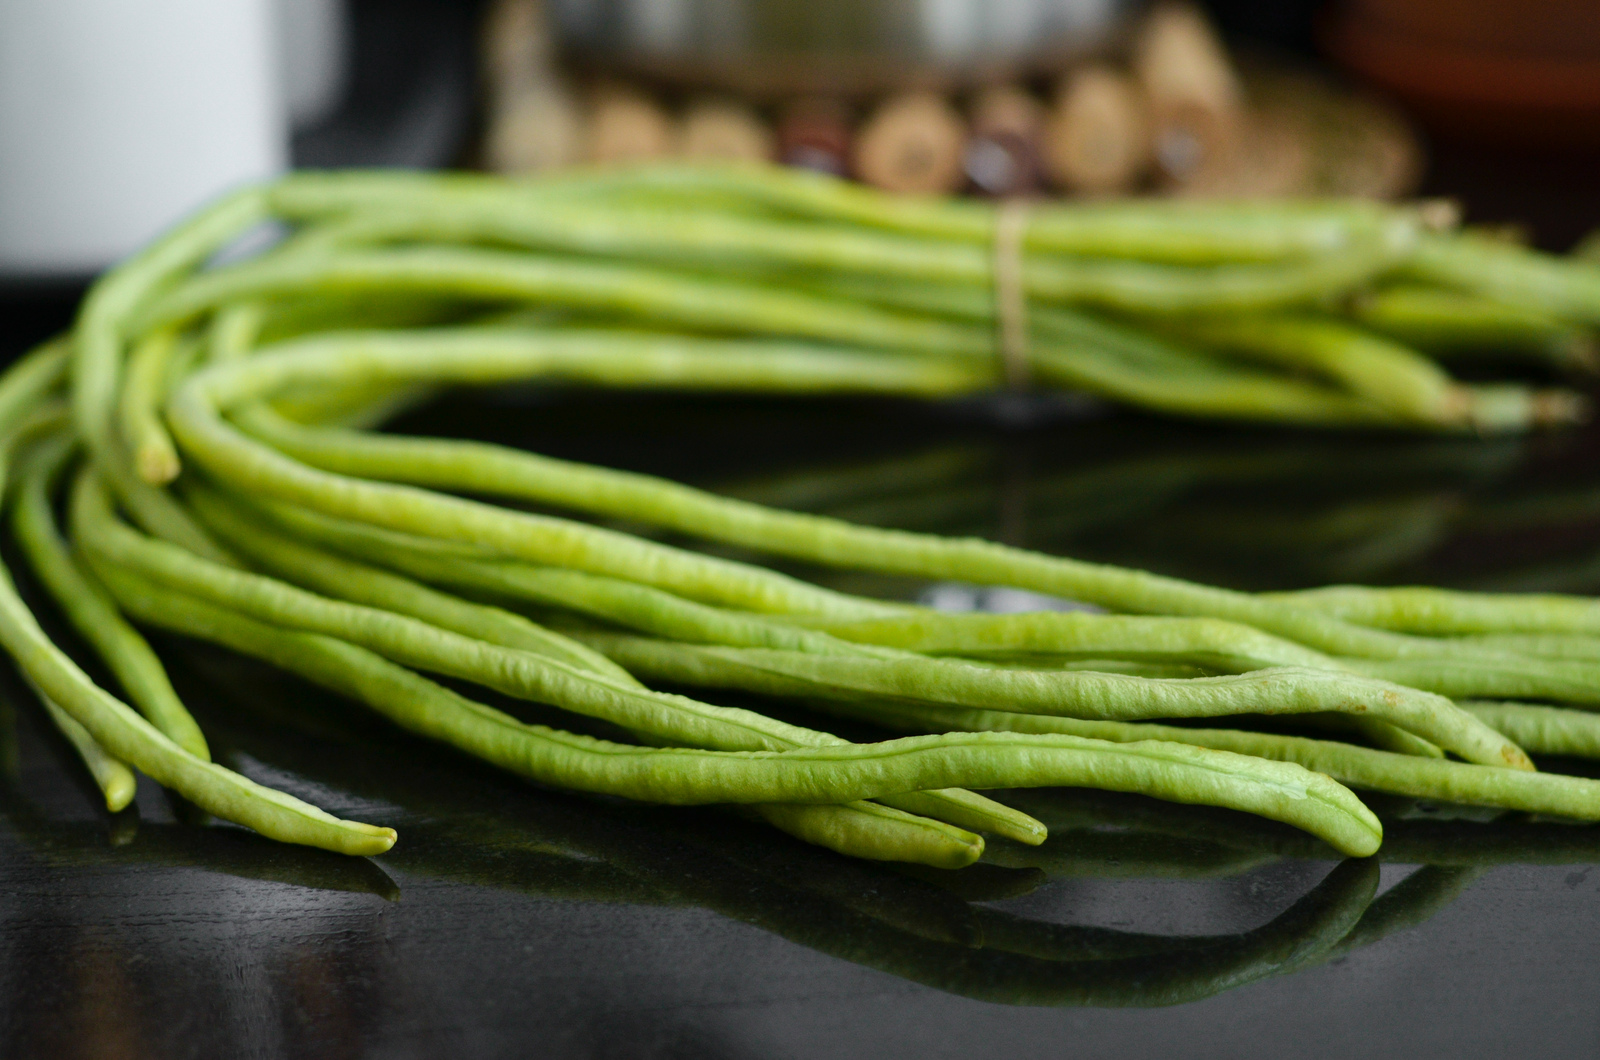 Long string beans bundle